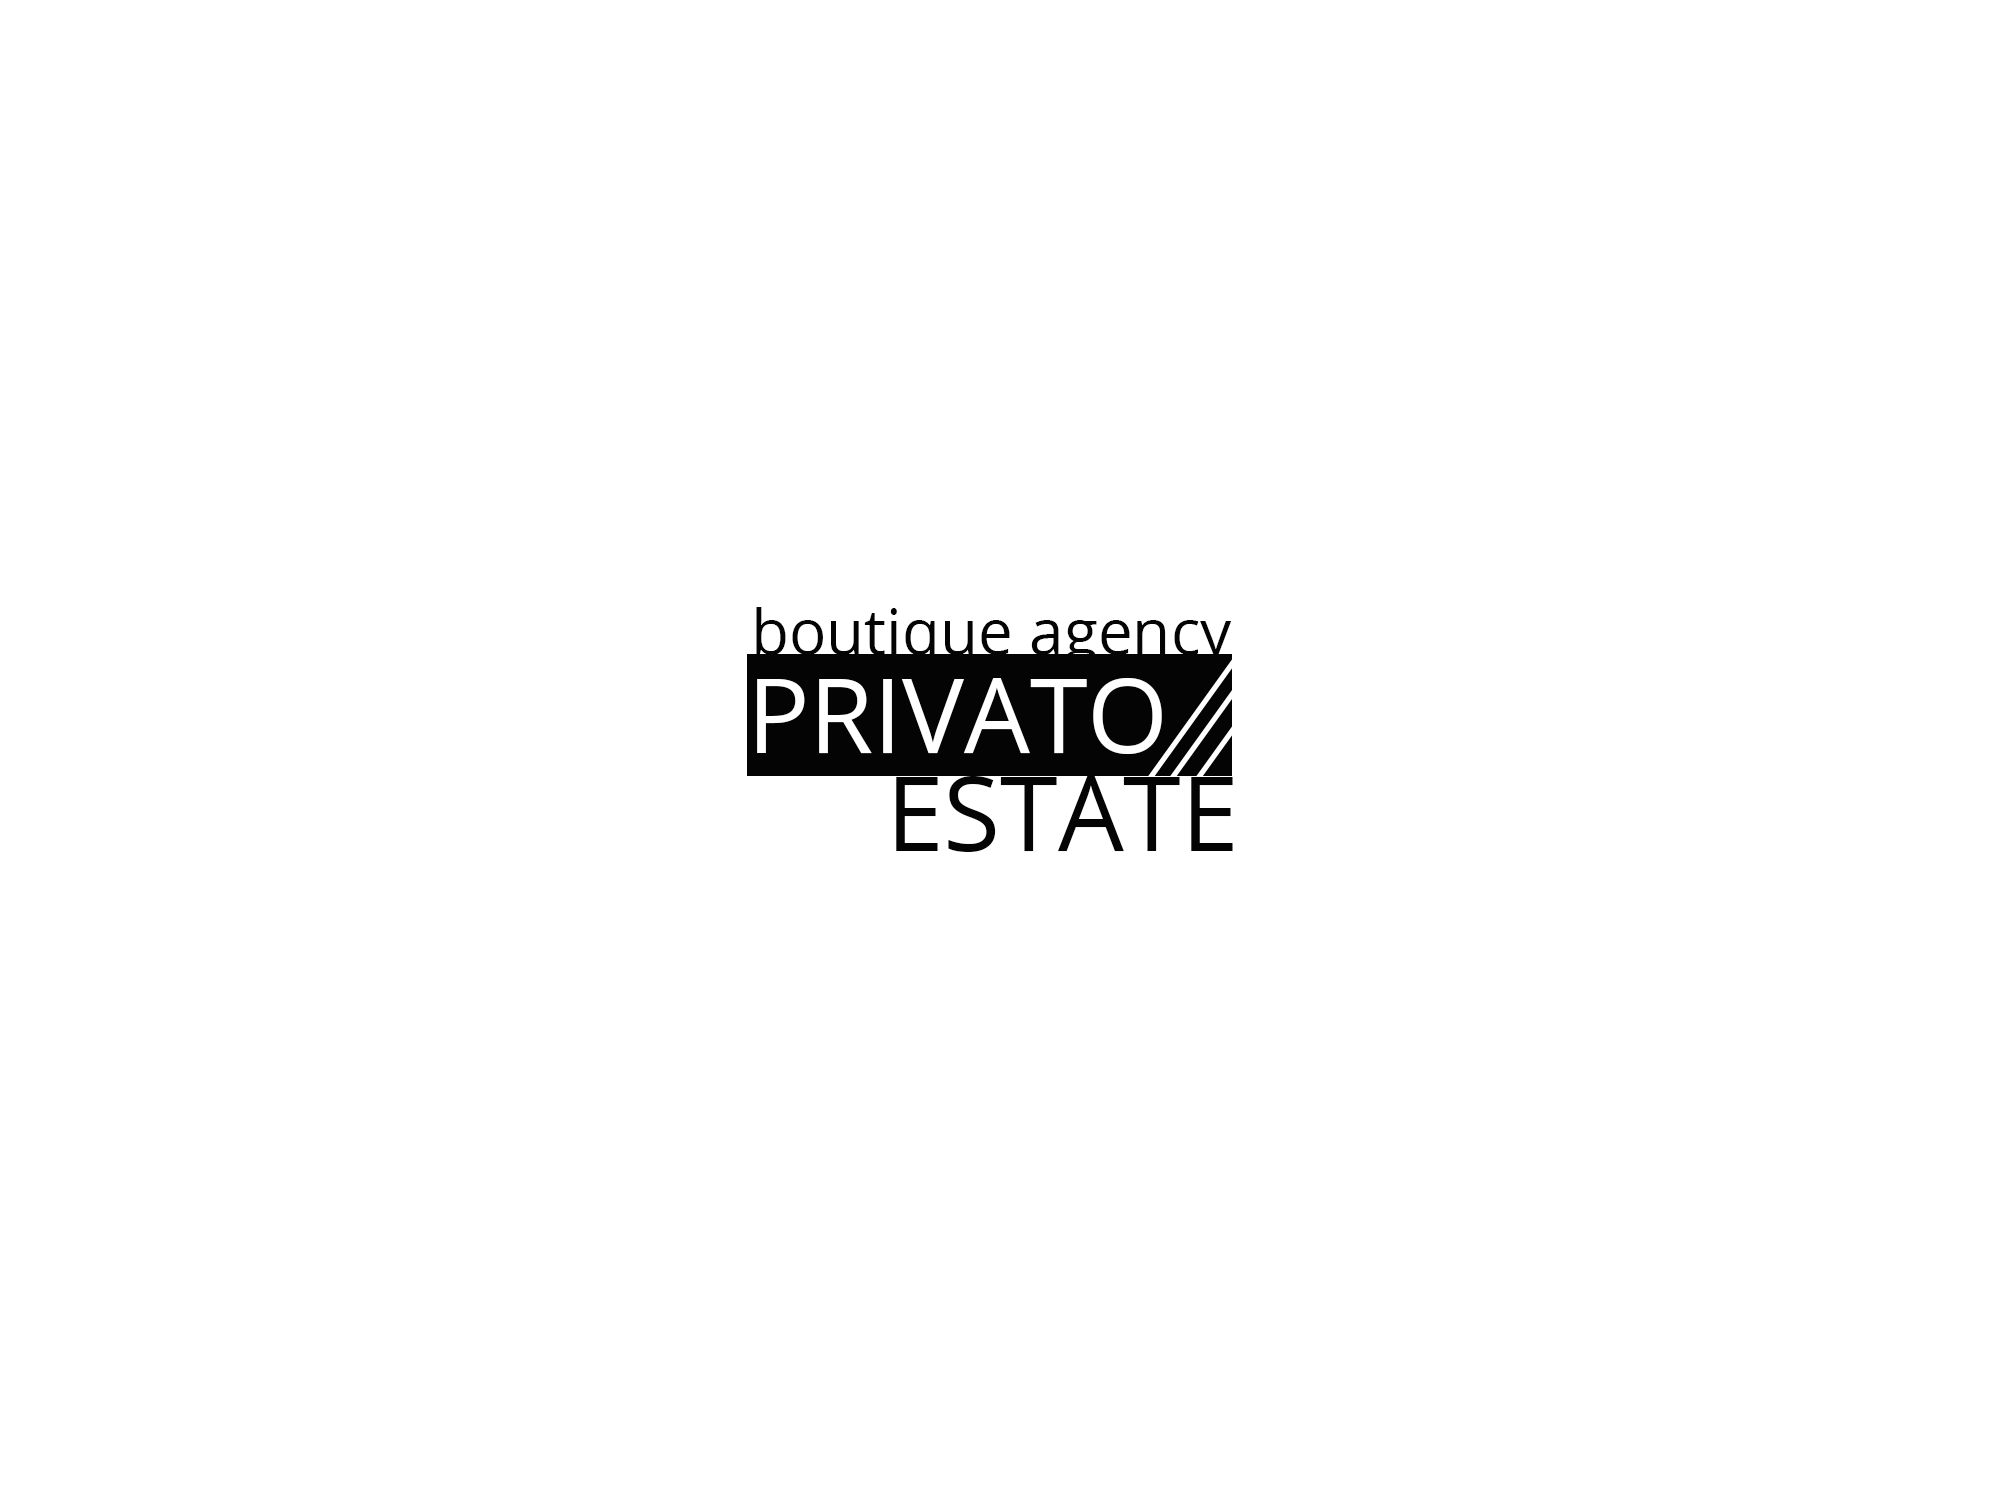 Логотип для PRIVATO ESTATE (boutique agency) - дизайнер alexamara